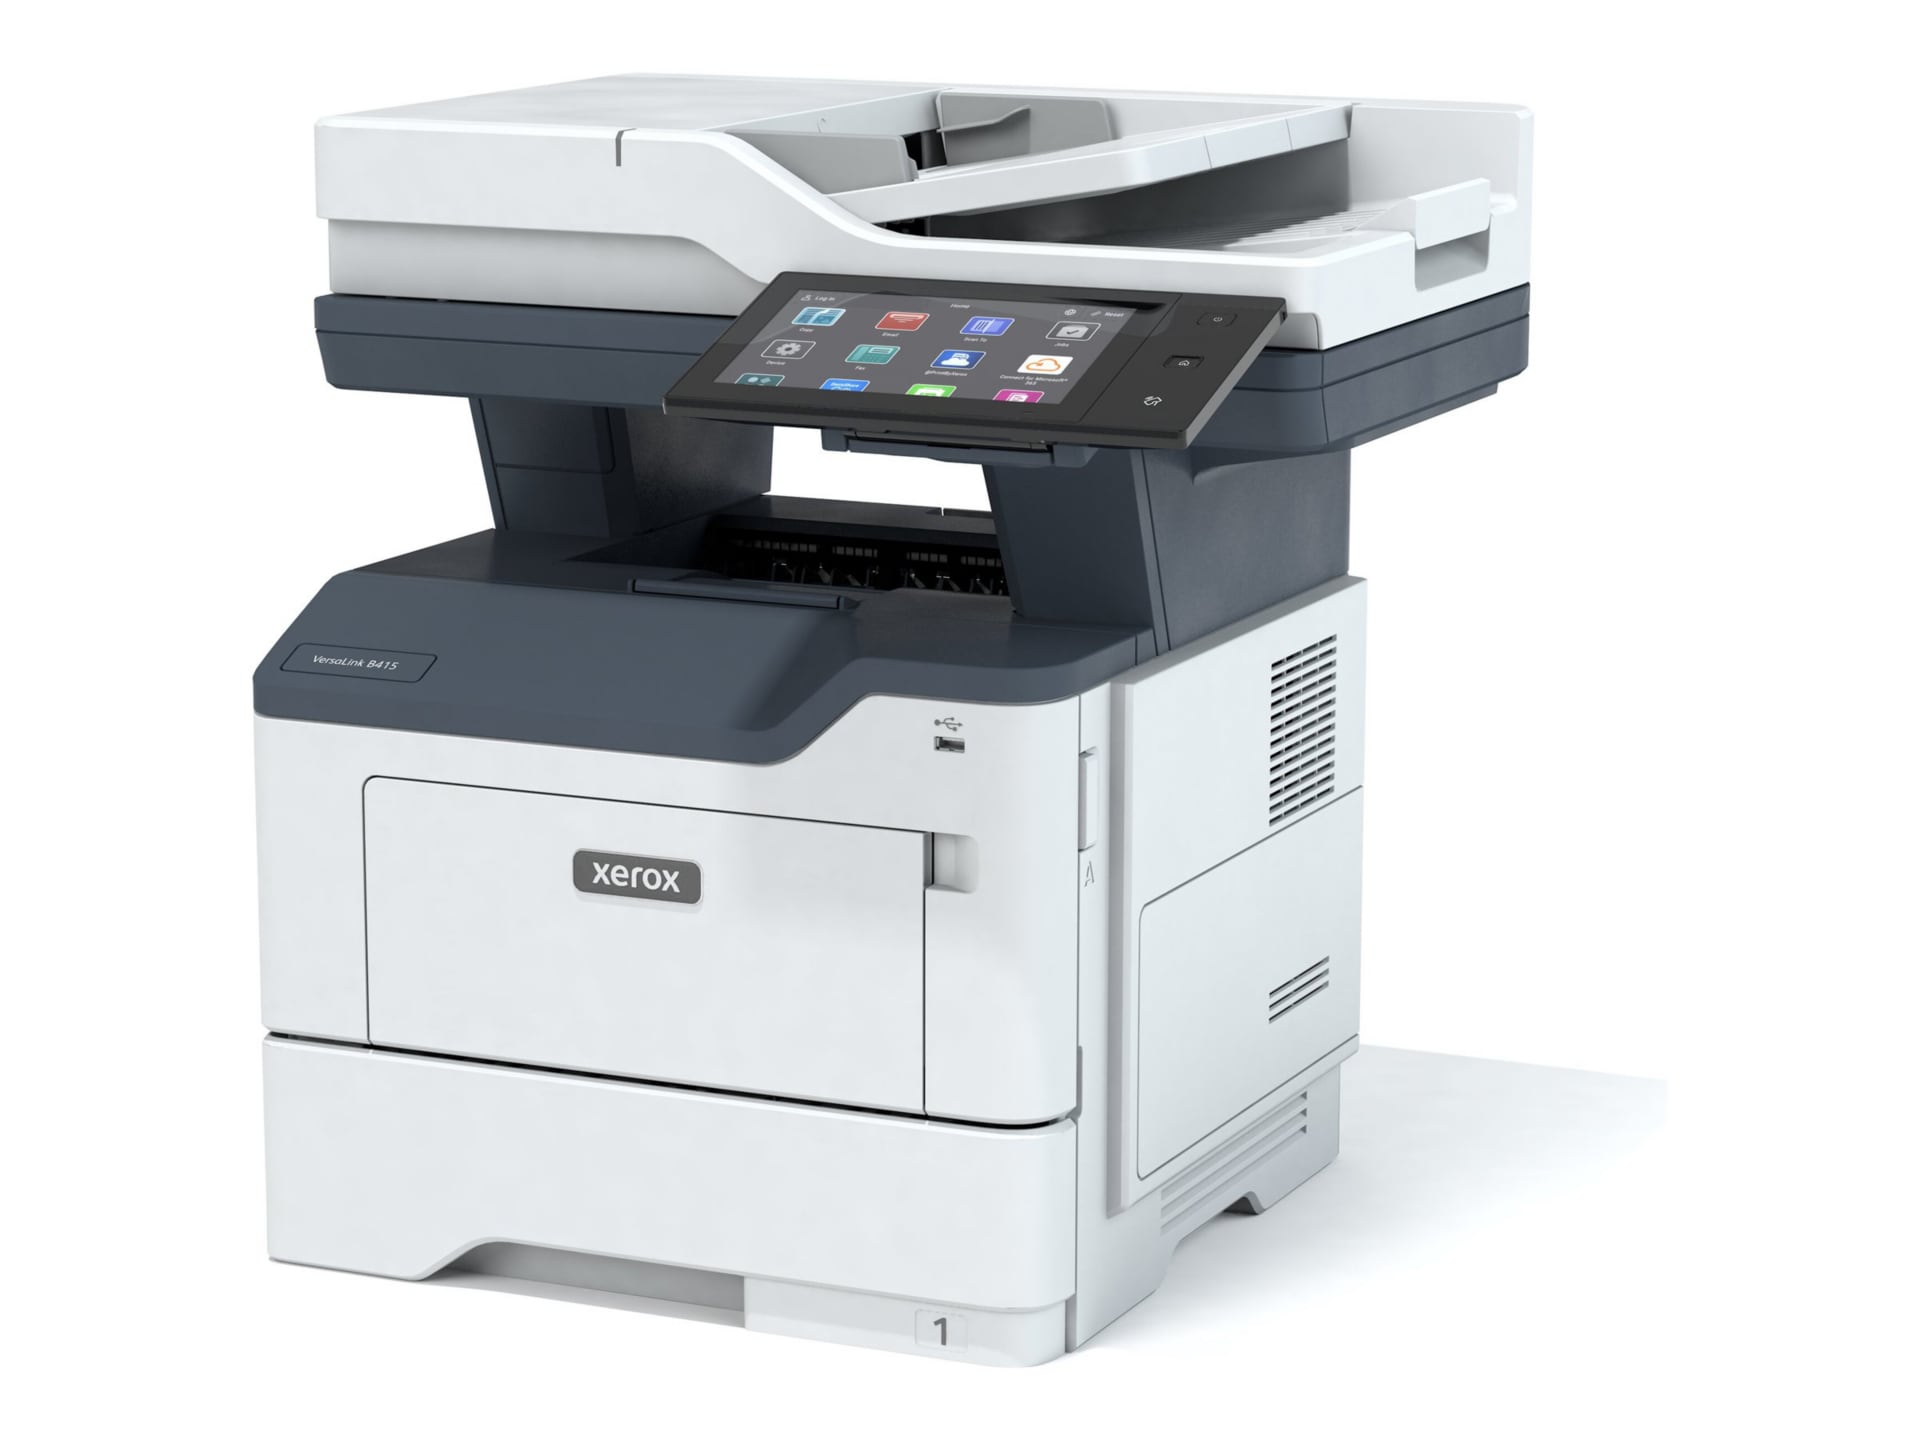 Xerox VersaLink B415/DN - multifunction printer - B/W